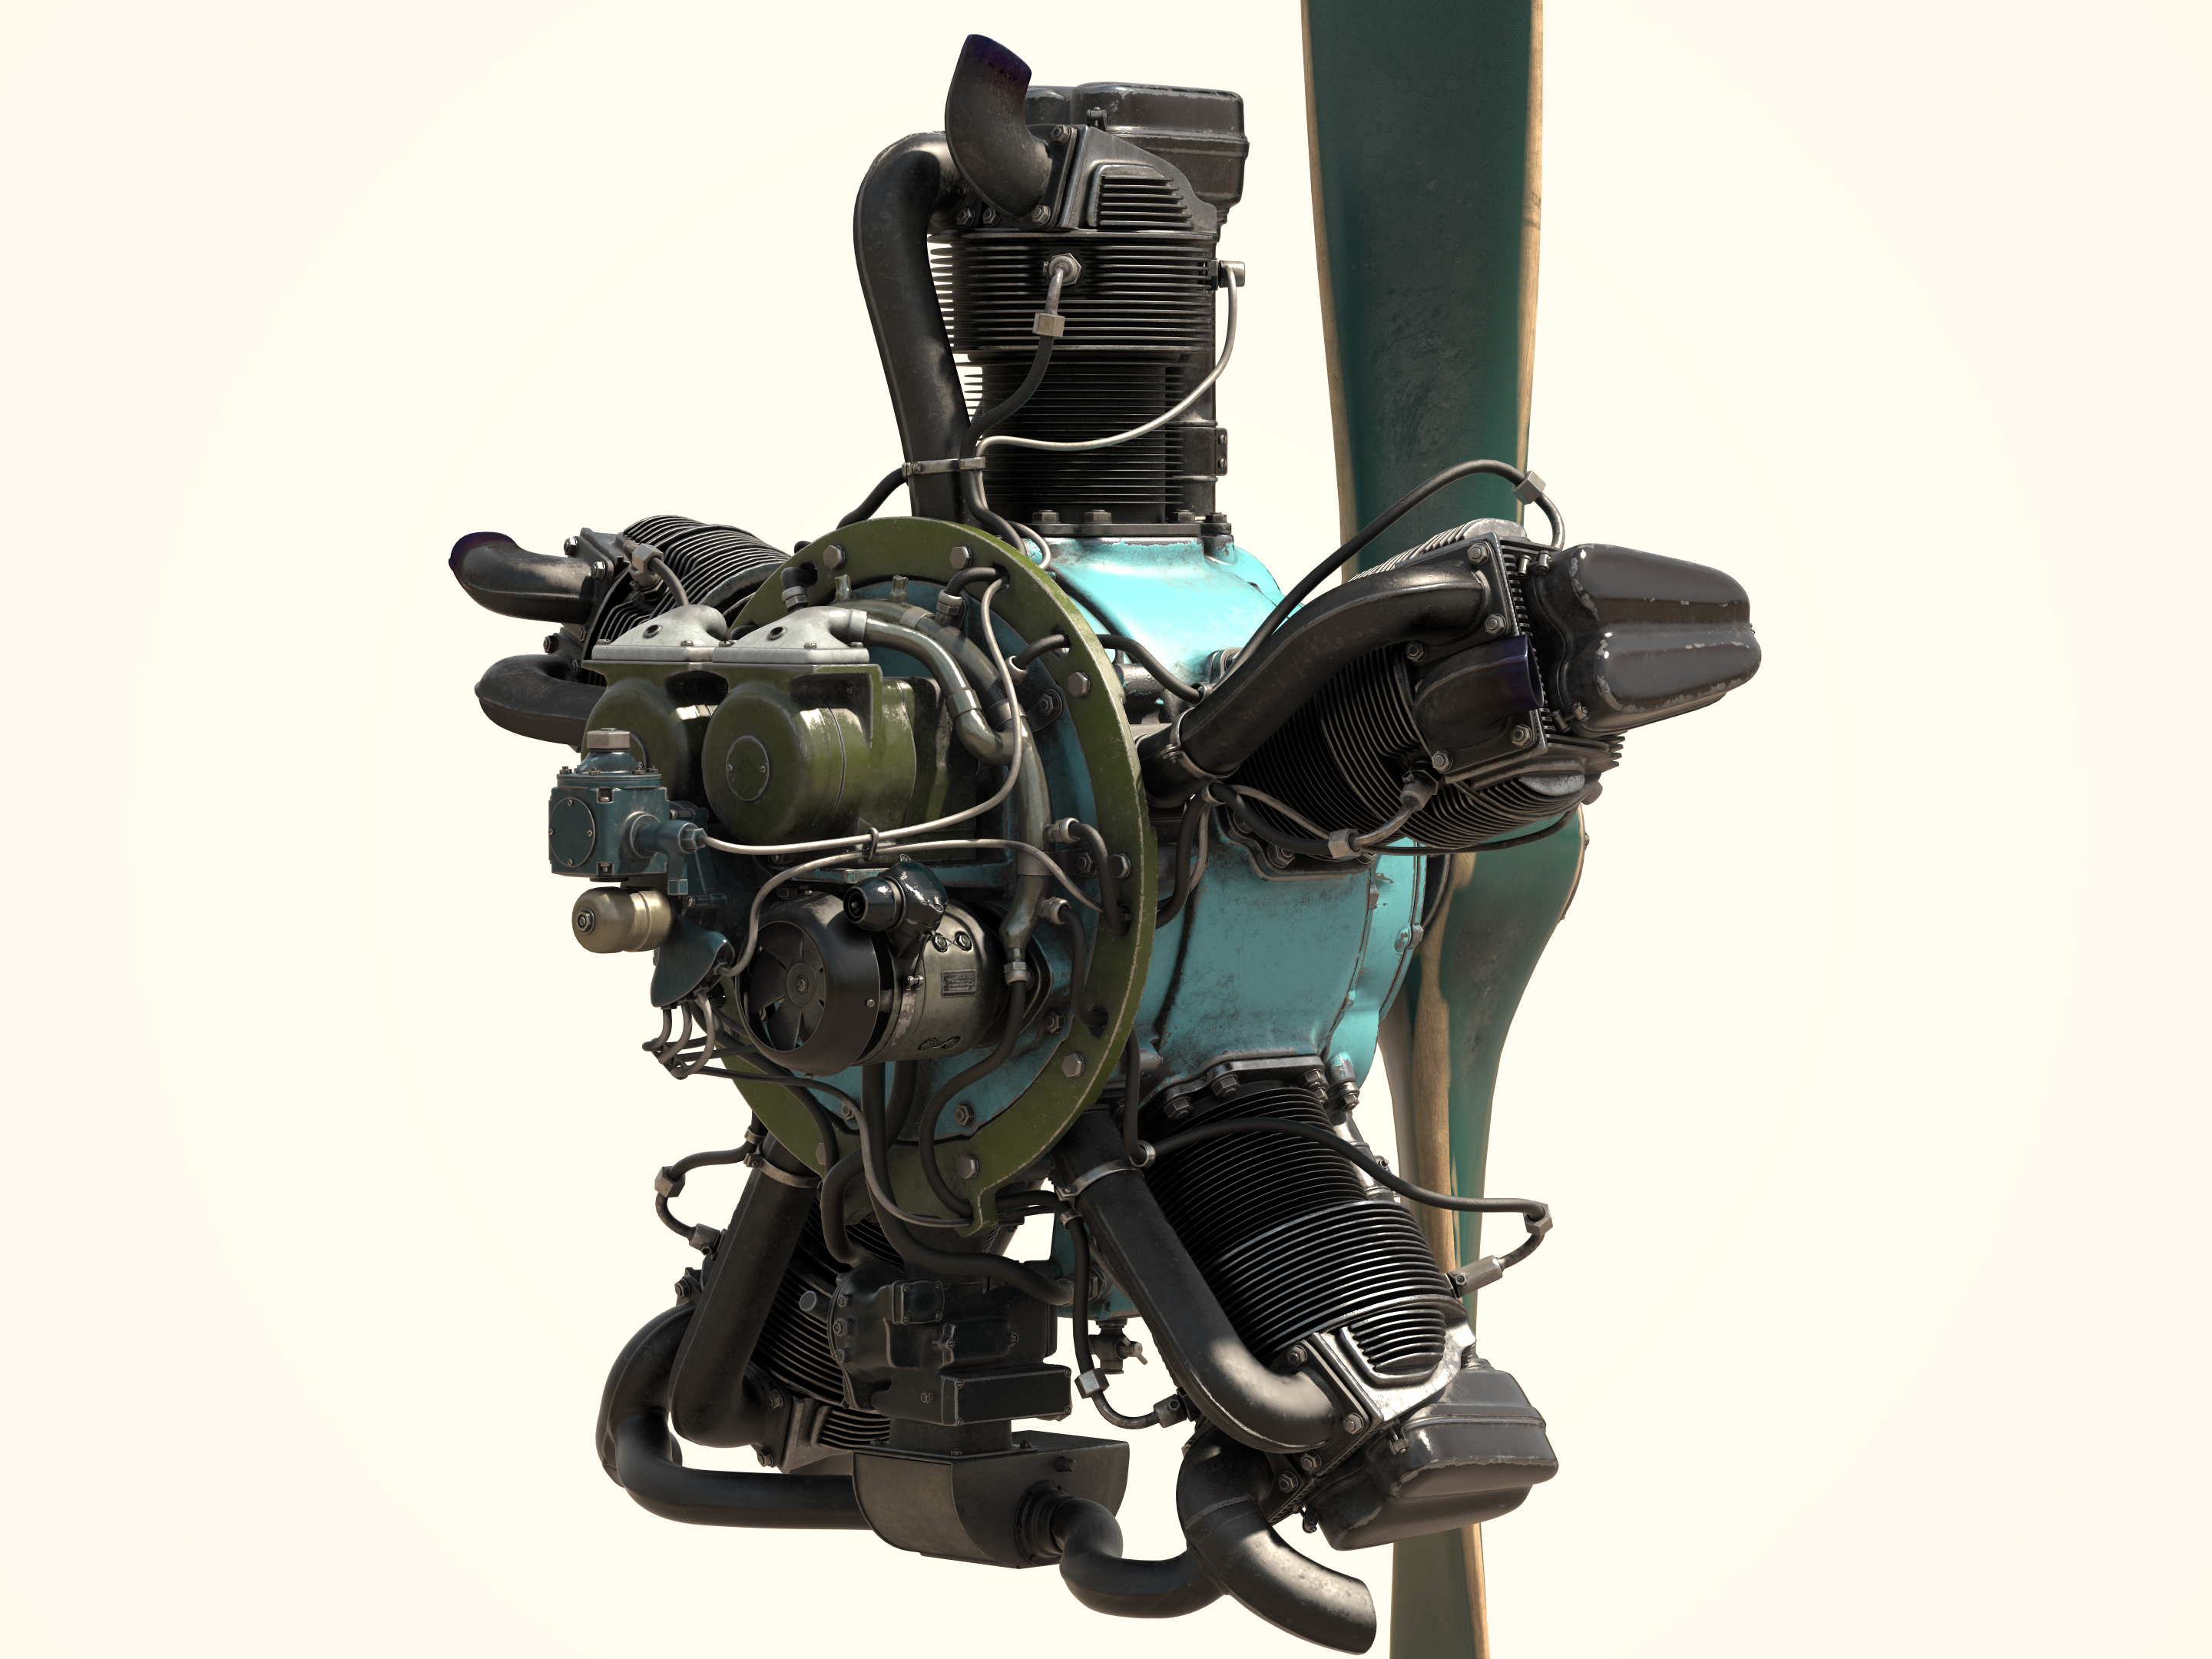 imagen de Motor de avión modelo M-11 3D en 3d max vray 2.5